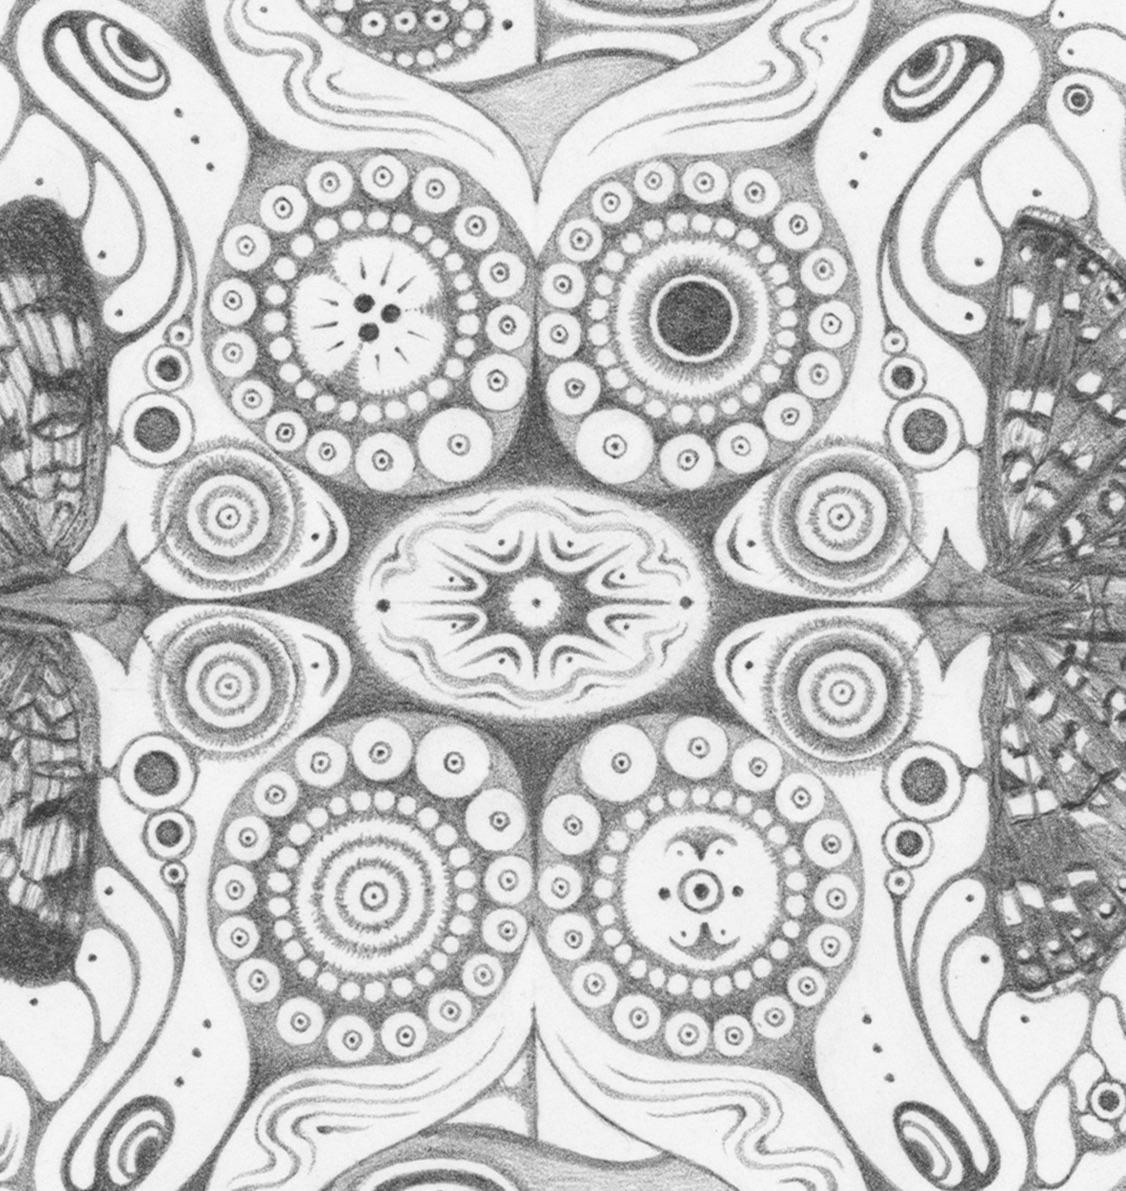 Snowflakes 146 Joy, Mandala Pencil Drawing with Butterflies, Landscapes, Pattern - Contemporary Art by Michiyo Ihara